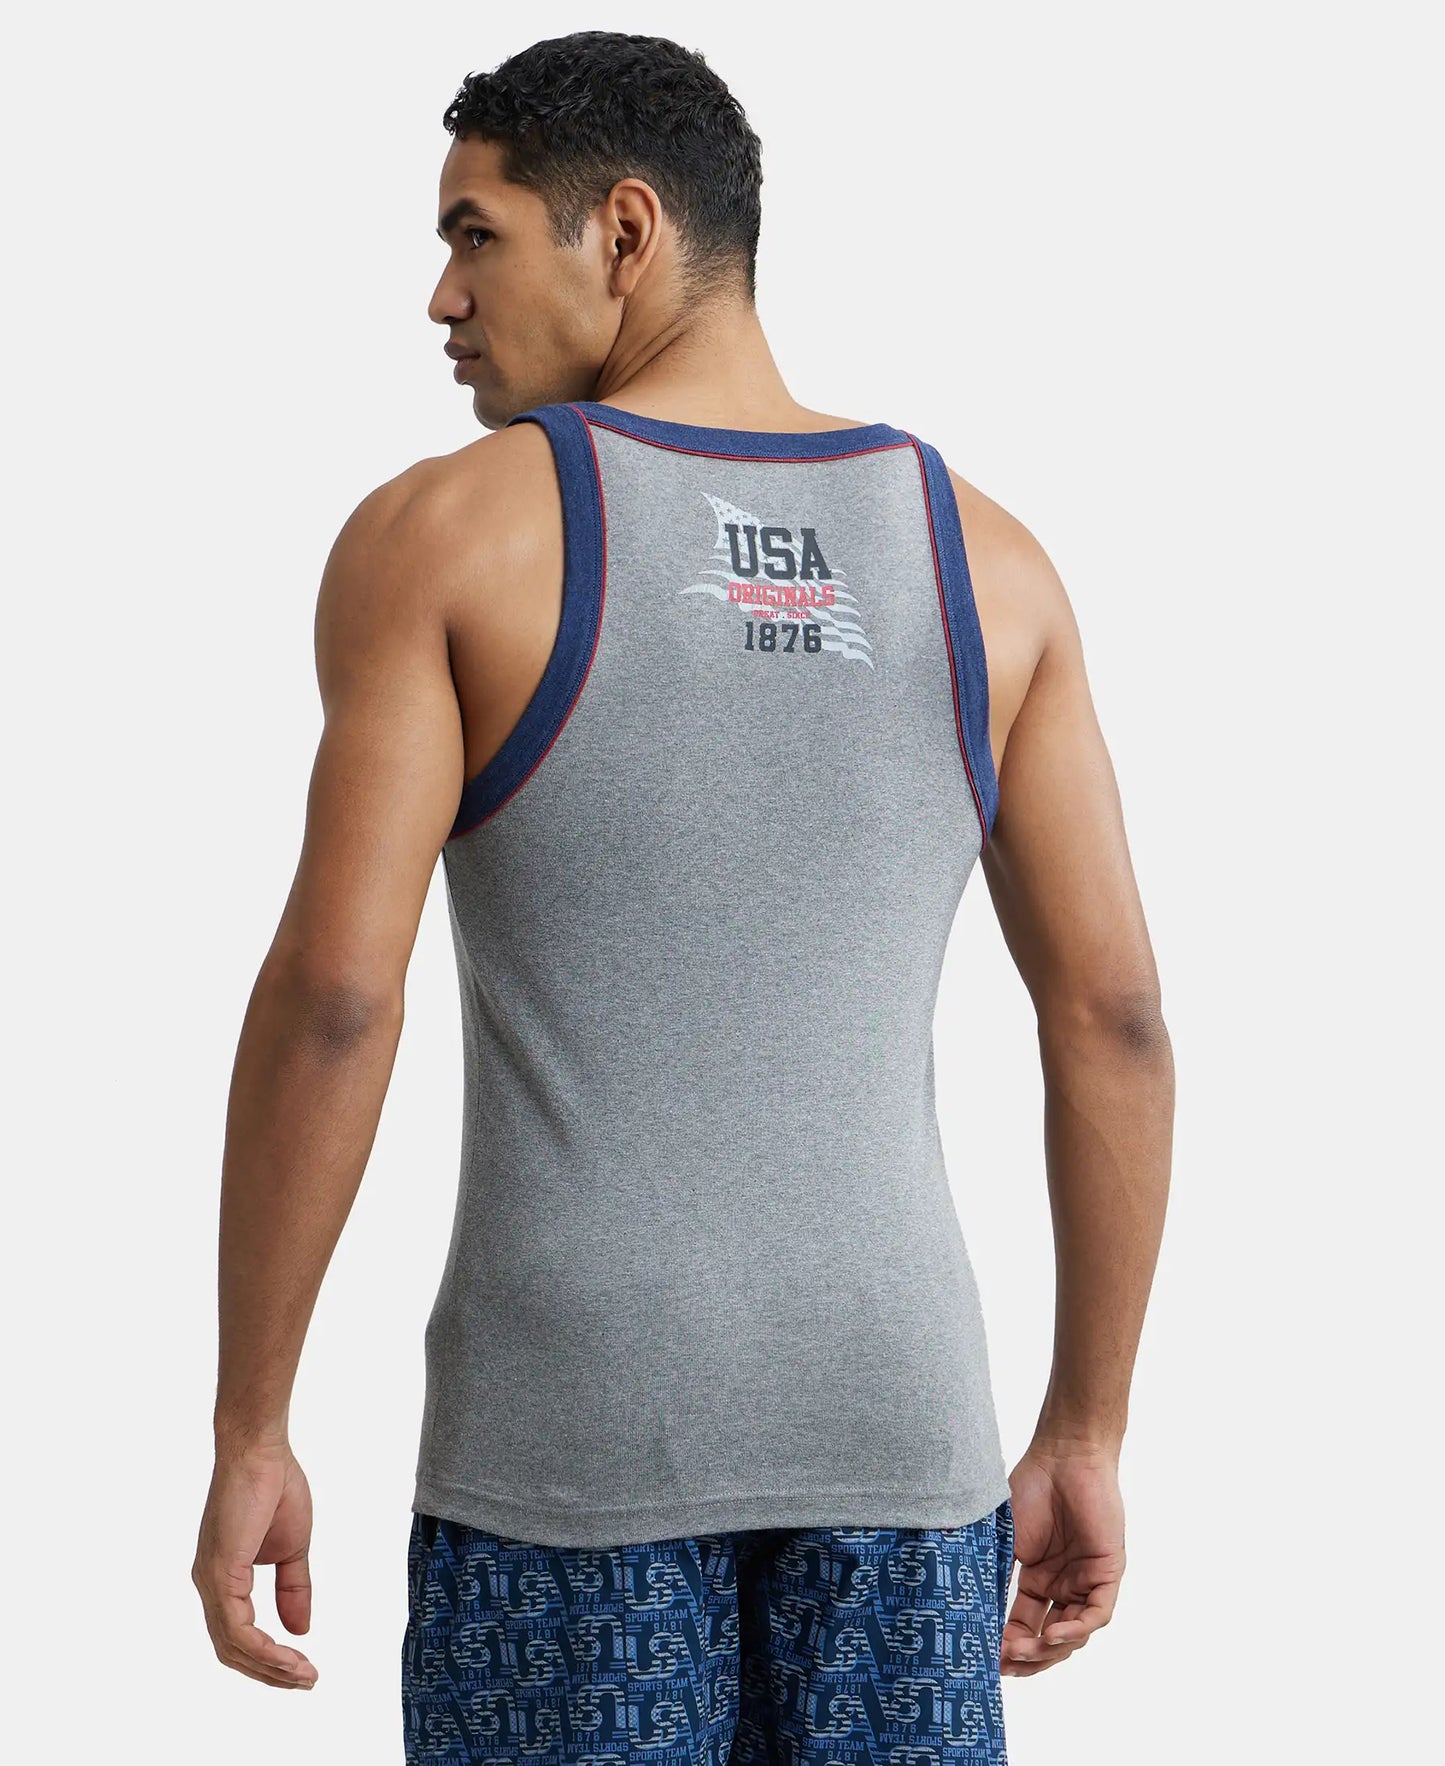 Super Combed Cotton Rib Square Neck Gym Vest with Graphic Print - Grey Melange & Ink Blue-3